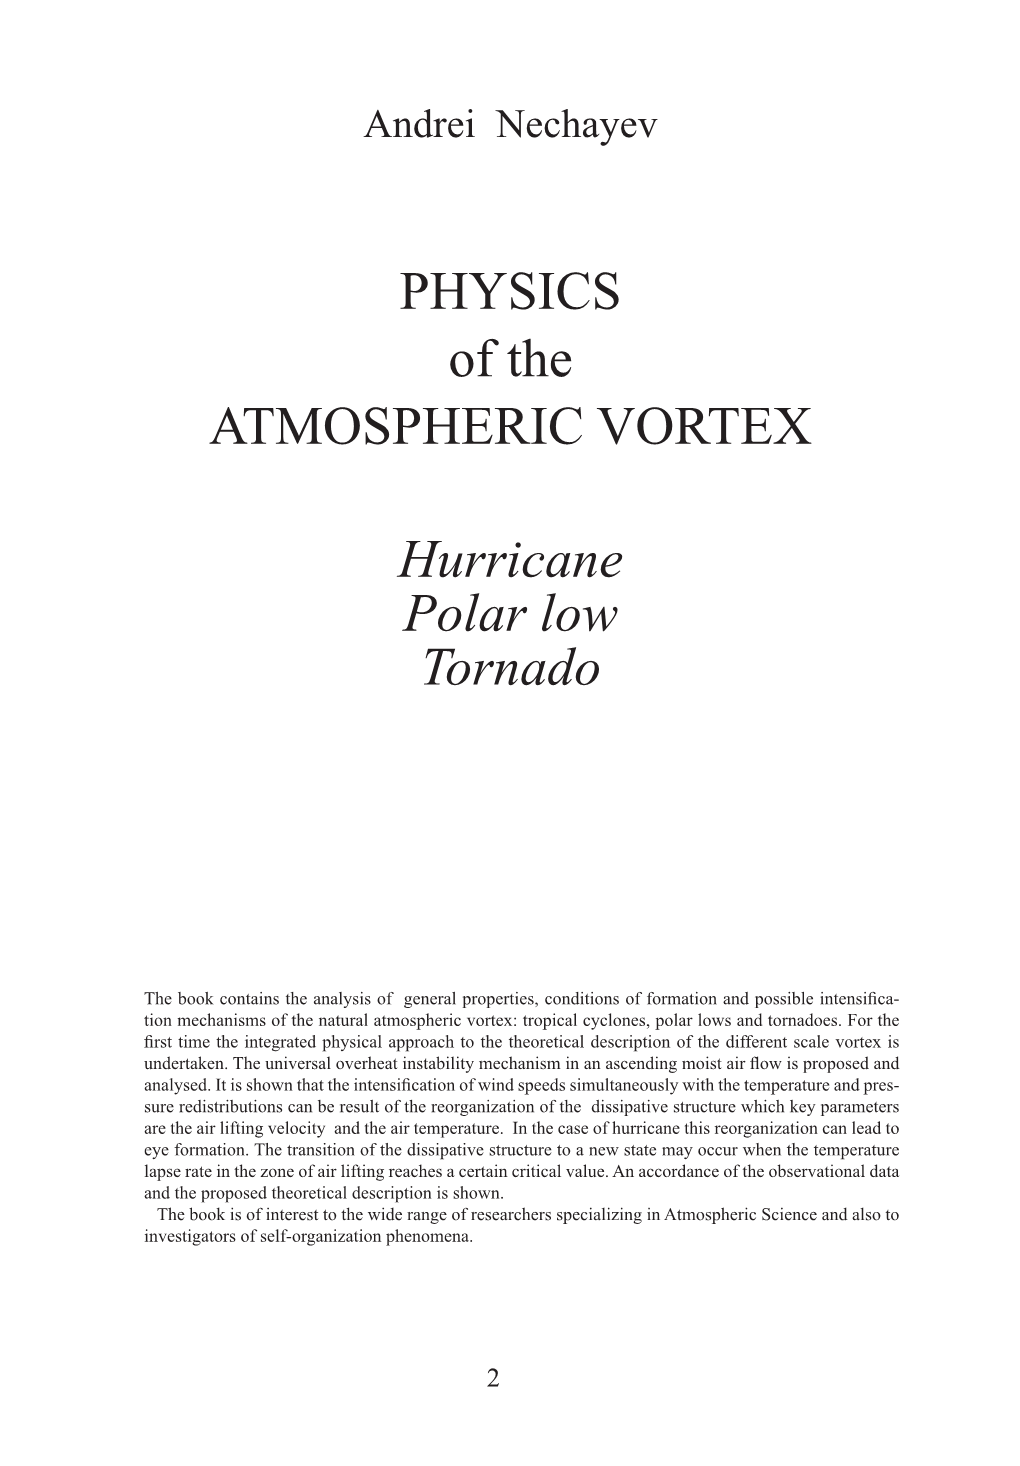 PHYSICS of the ATMOSPHERIC VORTEX Hurricane Polar Low